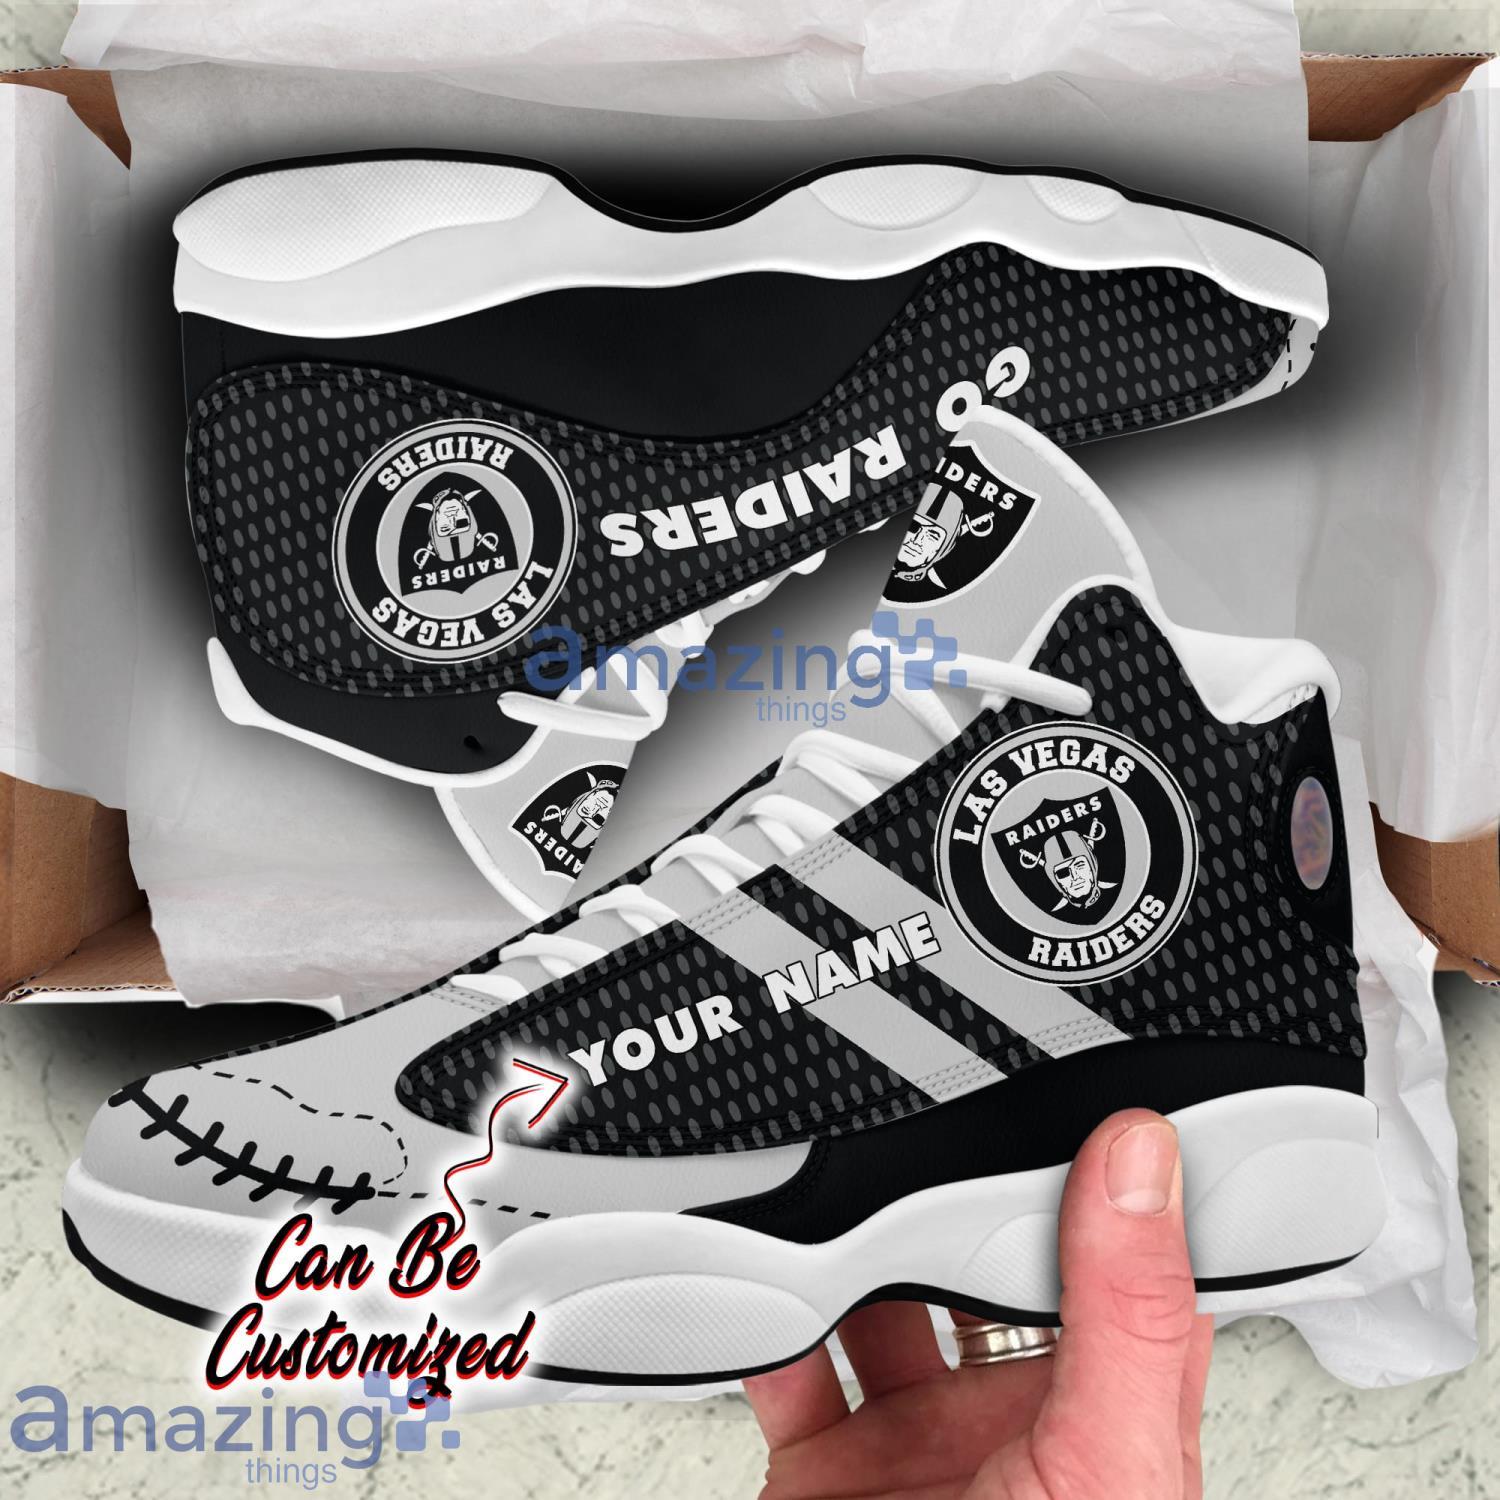 Football Sneakers Custom Name LV Raiders Go Raiders Rugby Ball Air Jordan 13  Shoes For Fans